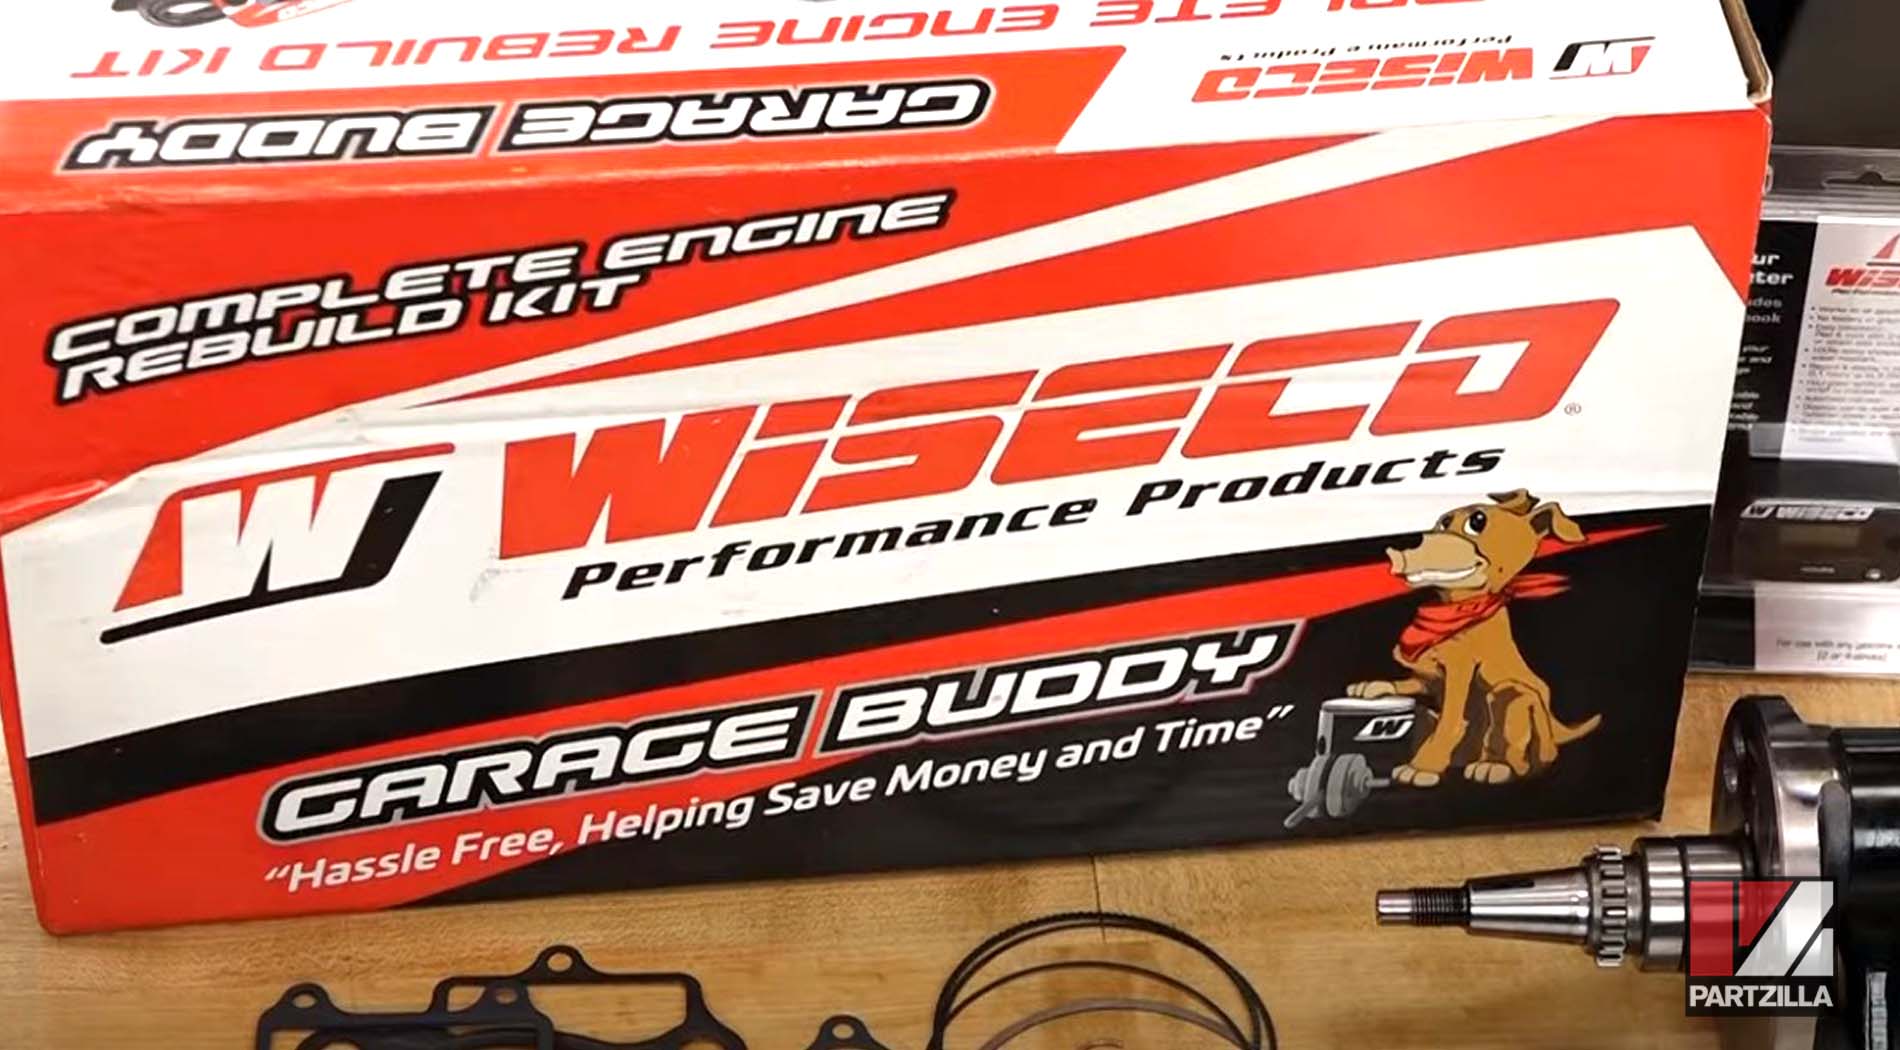 Honda Engine Rebuild Wiseco Garagre Buddy kit